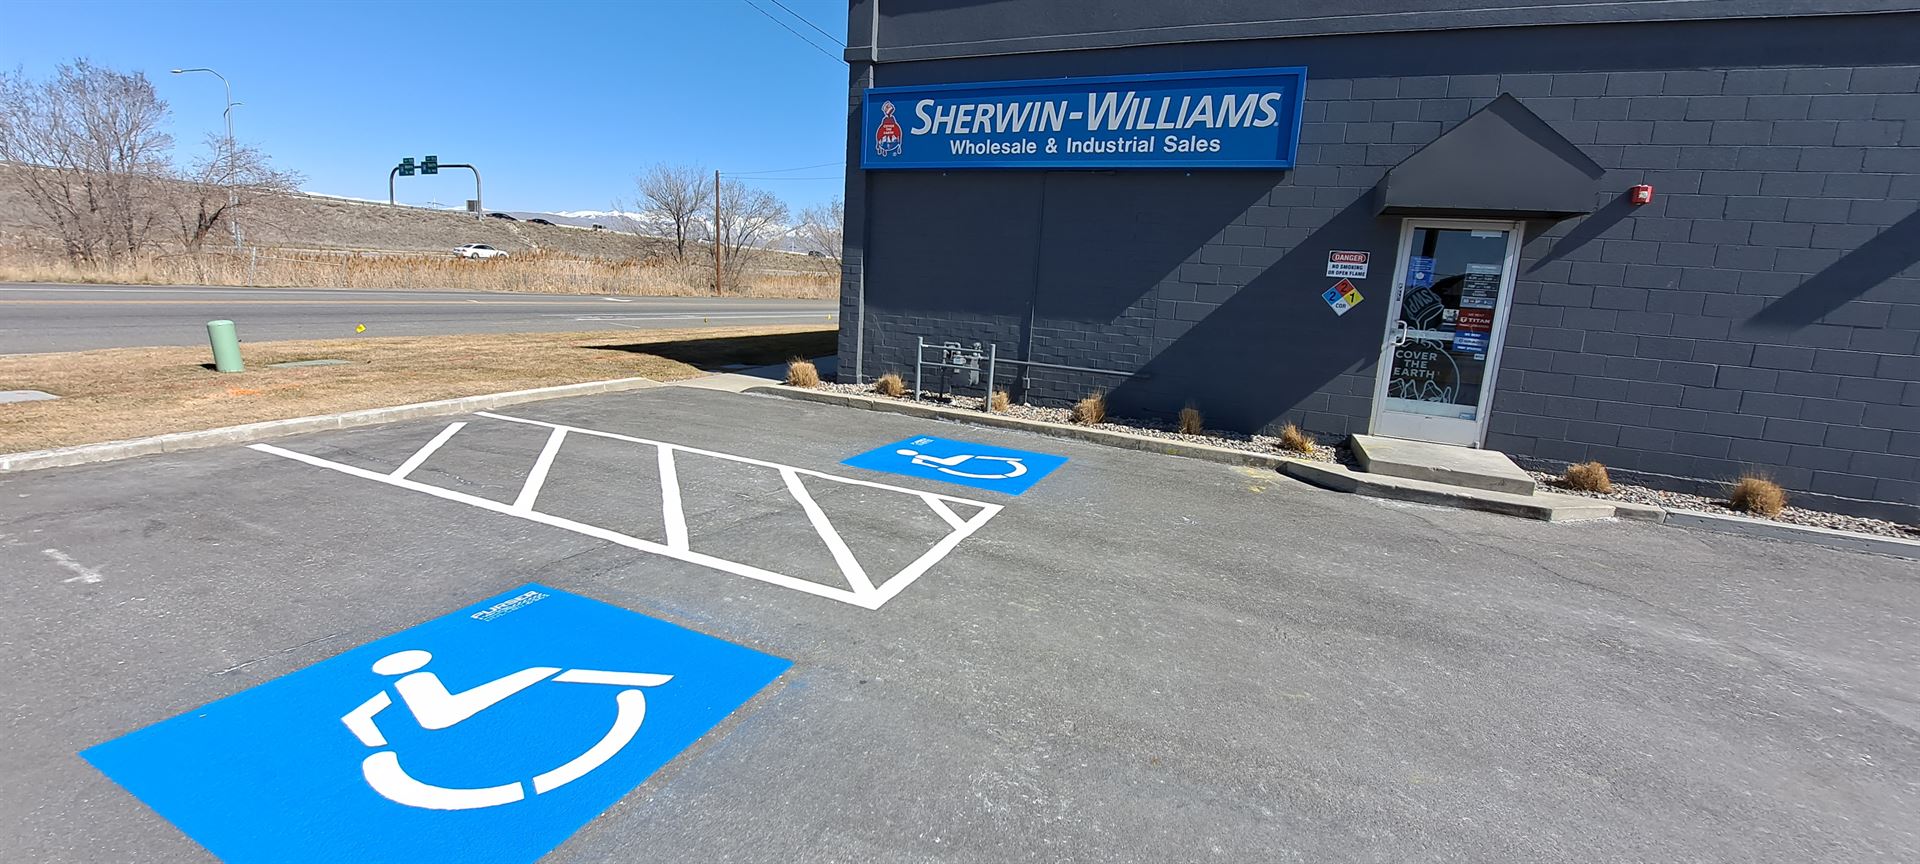 parking spots near business